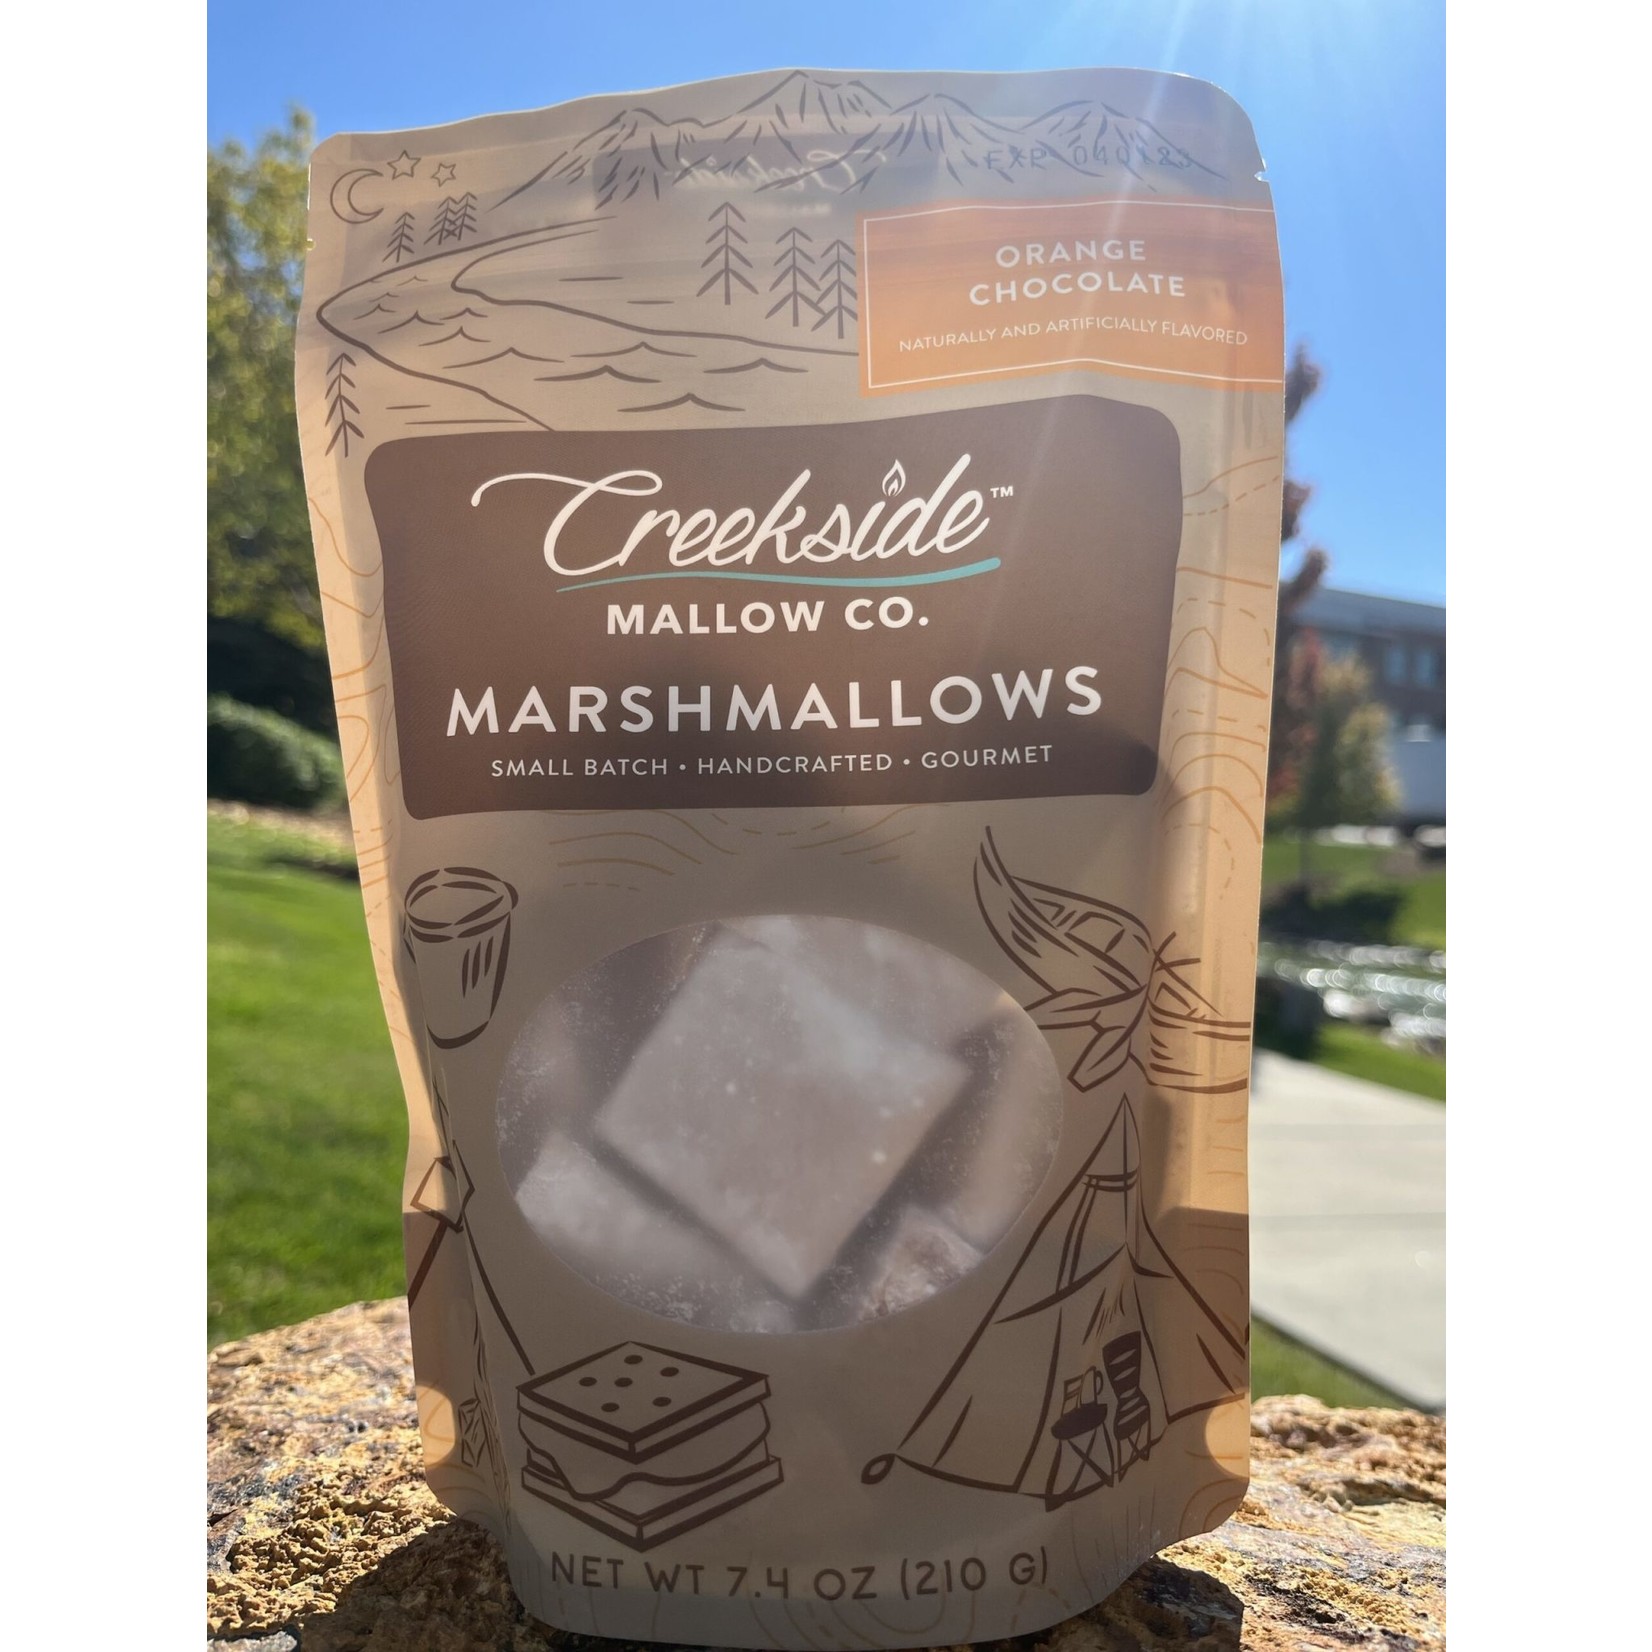 Creekside Mallow Co. / Fireside Mallow Co. Orange Chocolate Marshmallow Bag